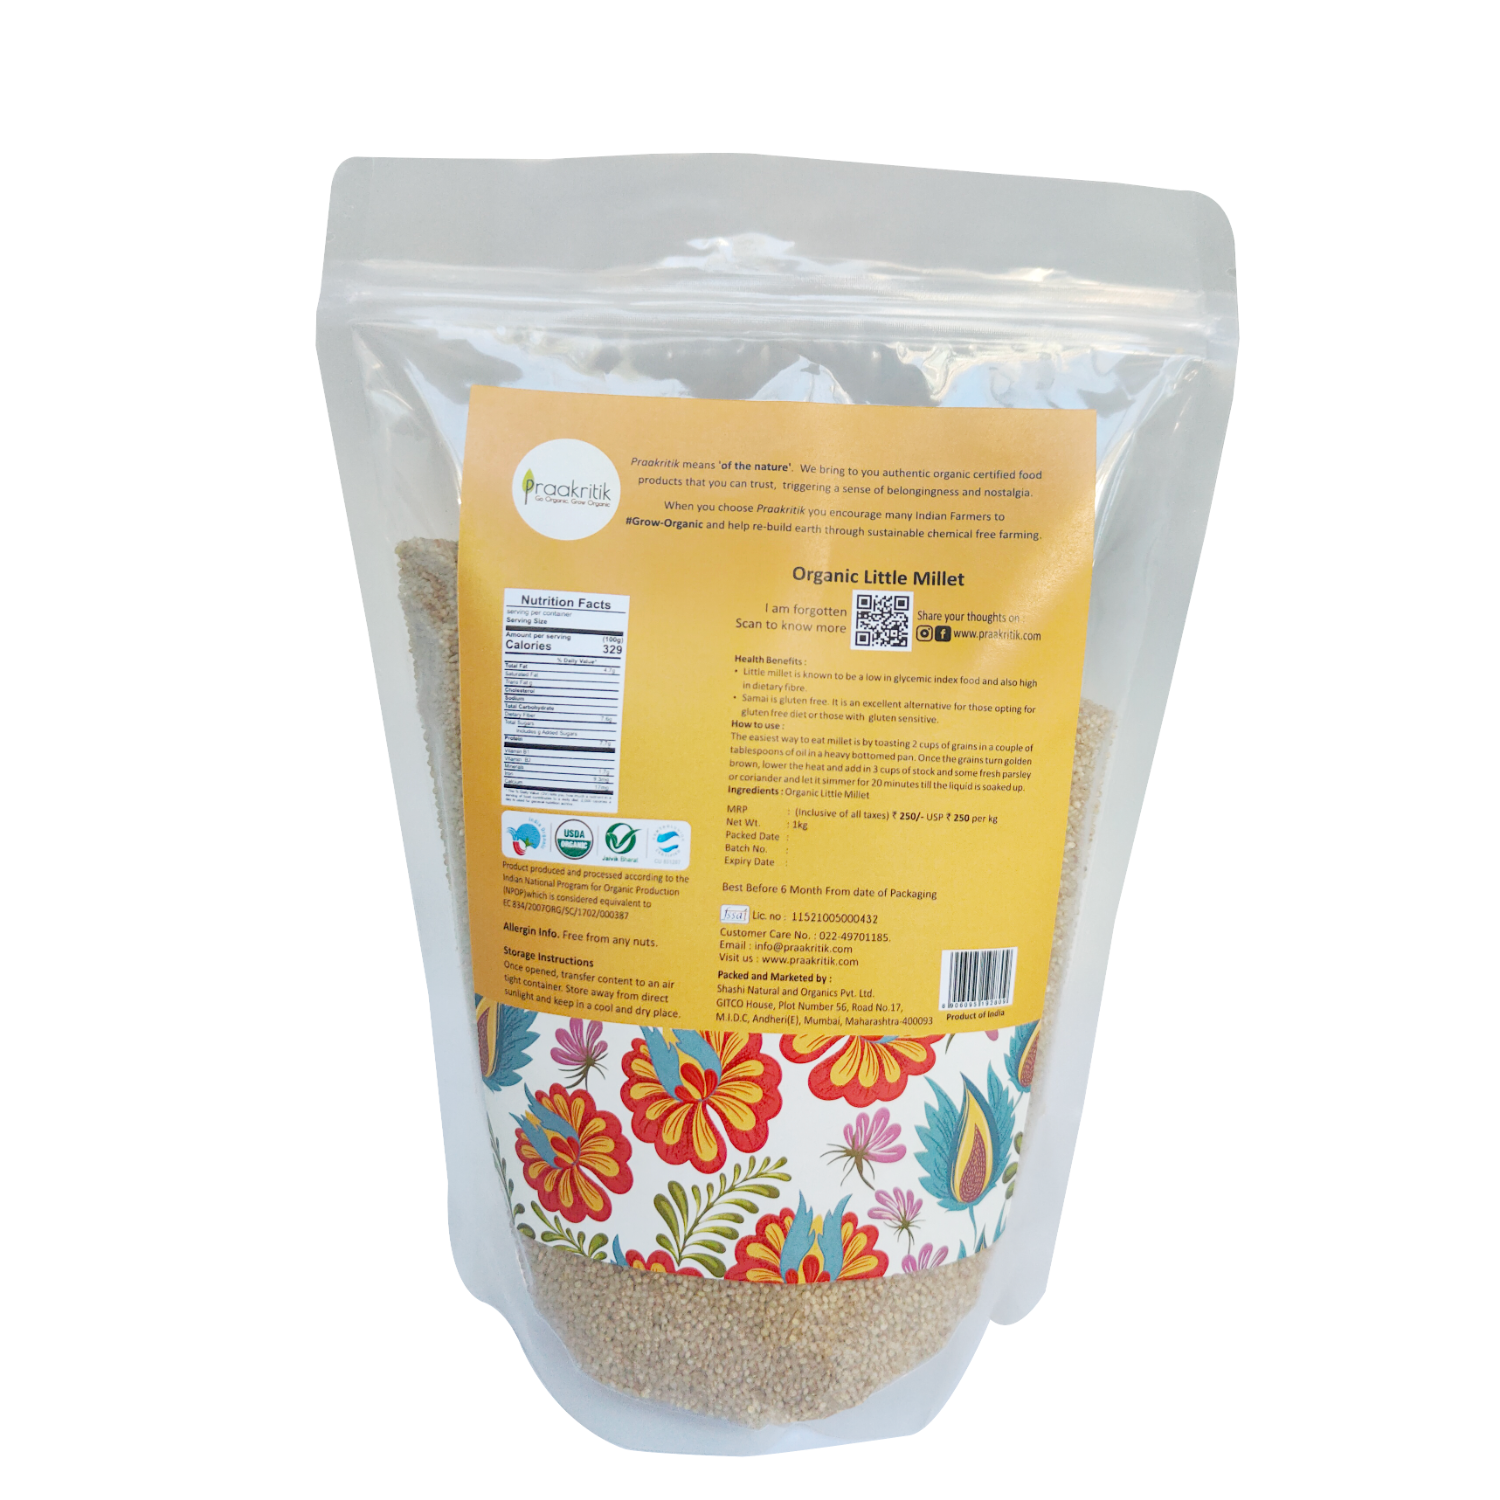 Praakritik Organic Little Millet (Sama) | Good for Heart & Cholestrol | Maintains Blood Sugar | Gluten-Free| 1kg